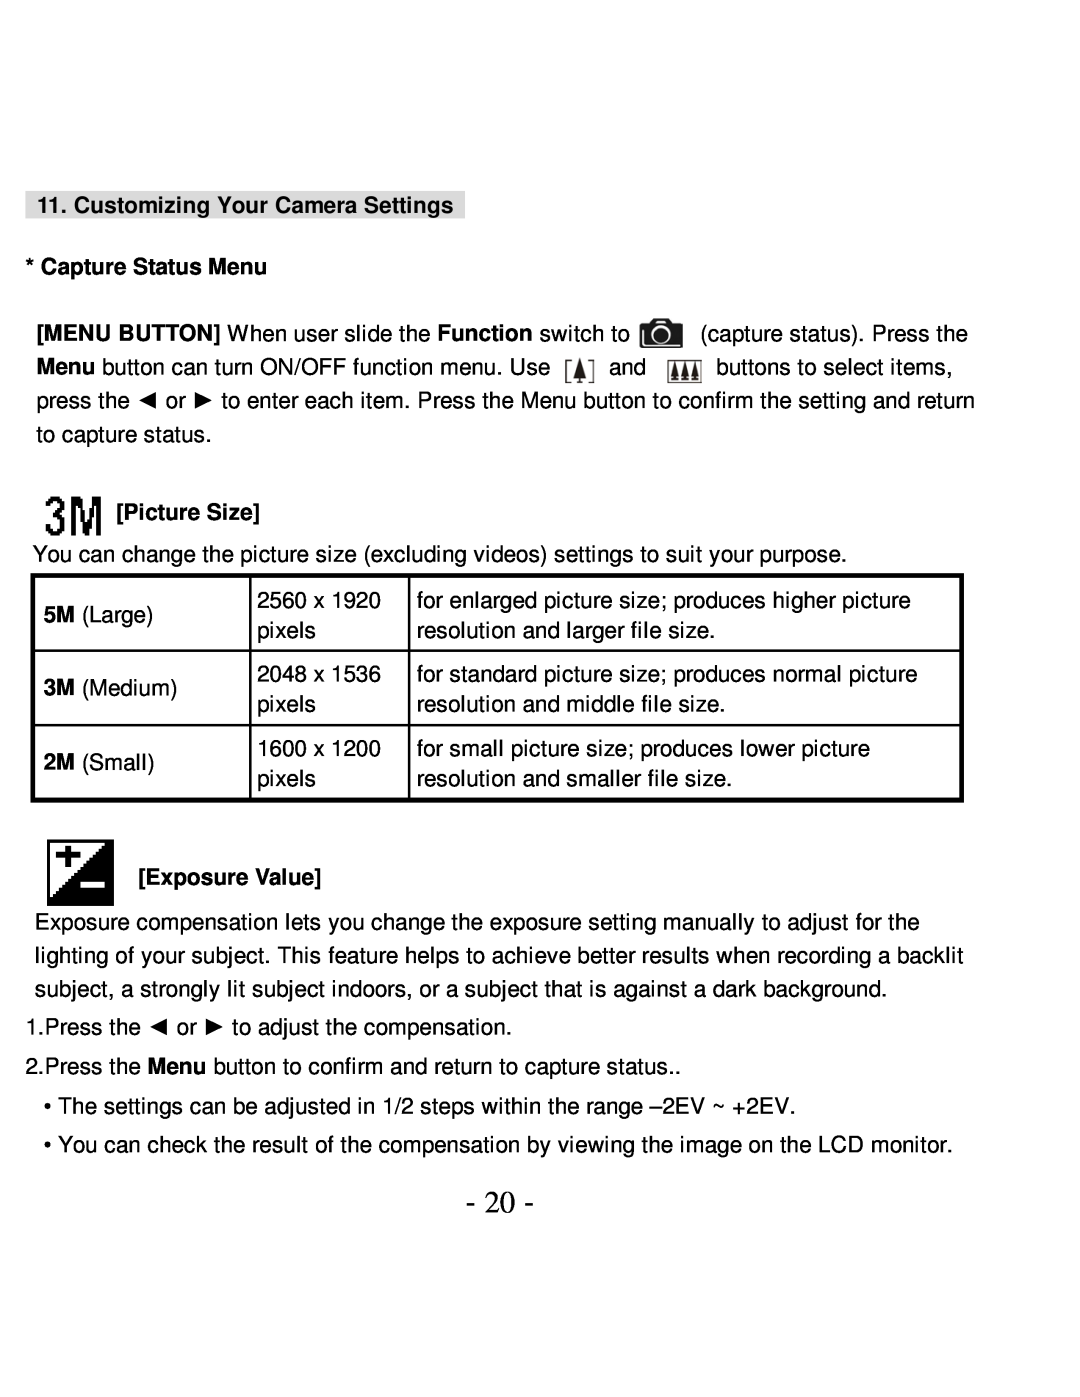 VistaQuest VQ5015 user manual Customizing Your Camera Settings Capture Status Menu, Picture Size, Exposure Value 